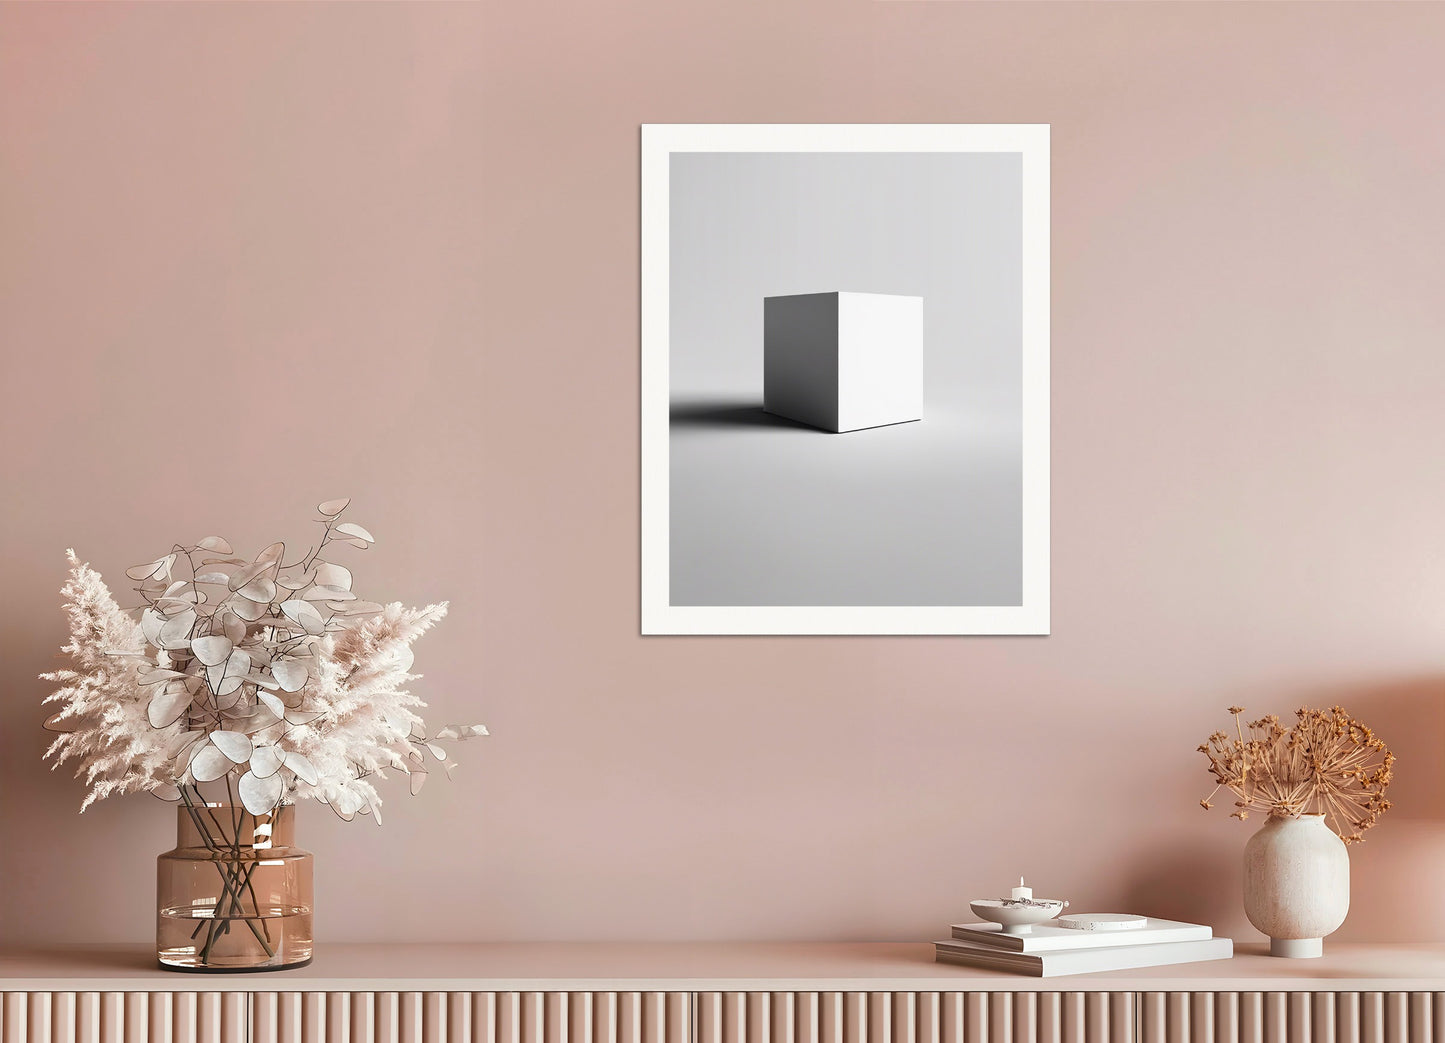 Poster: Minimalism art, Cube